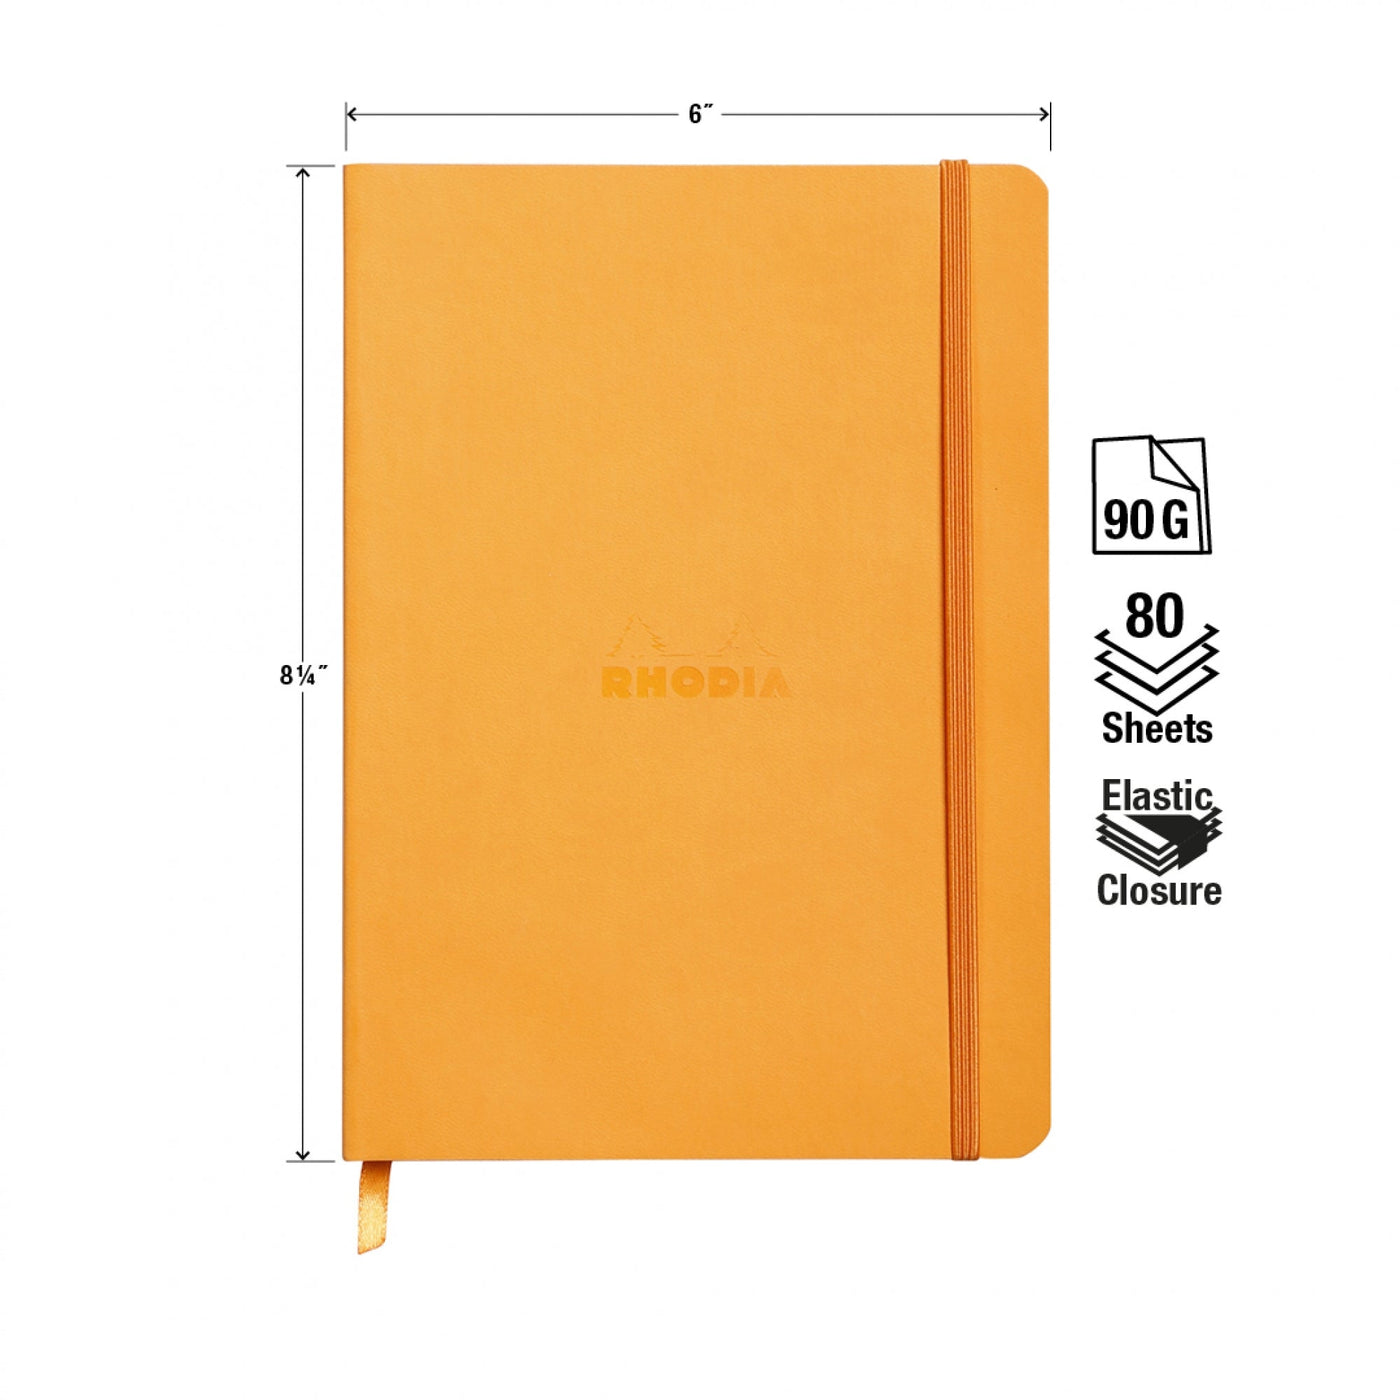 Rhodia Rhodiarama Soft Cover A5 Orange Lined Notebook Measurements